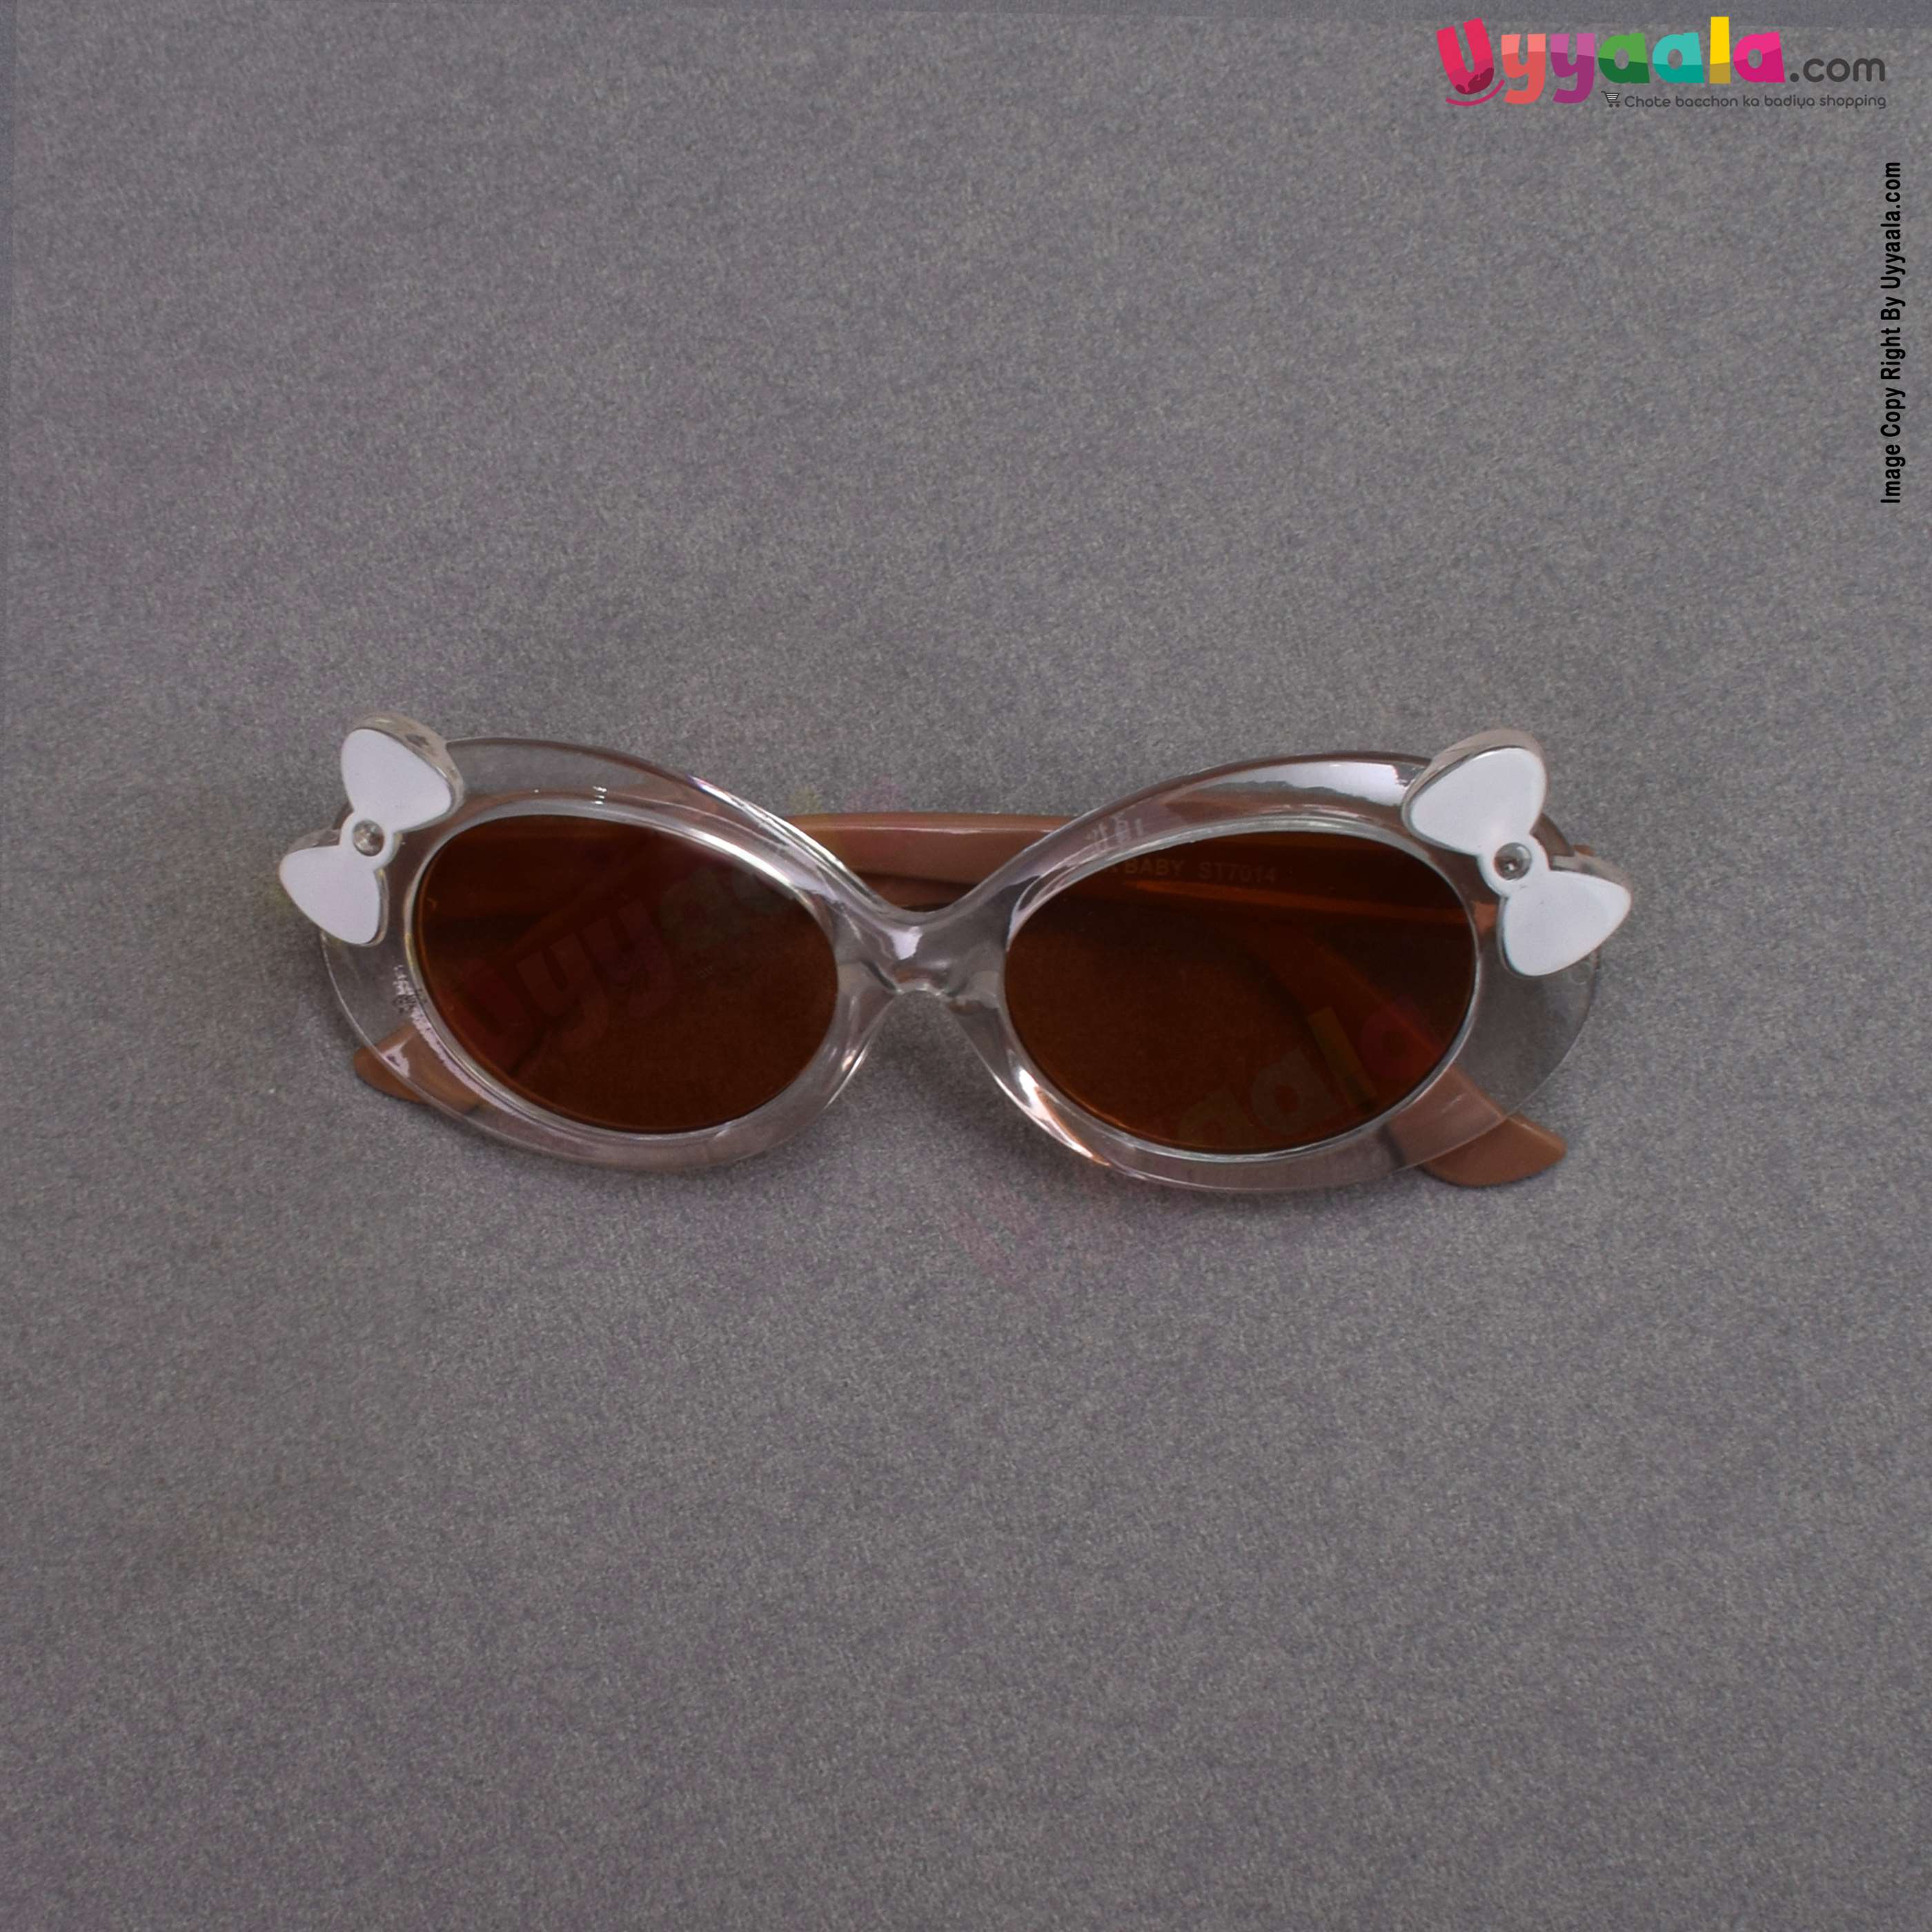 Stylish cat-eye transparent sunglasses for kids